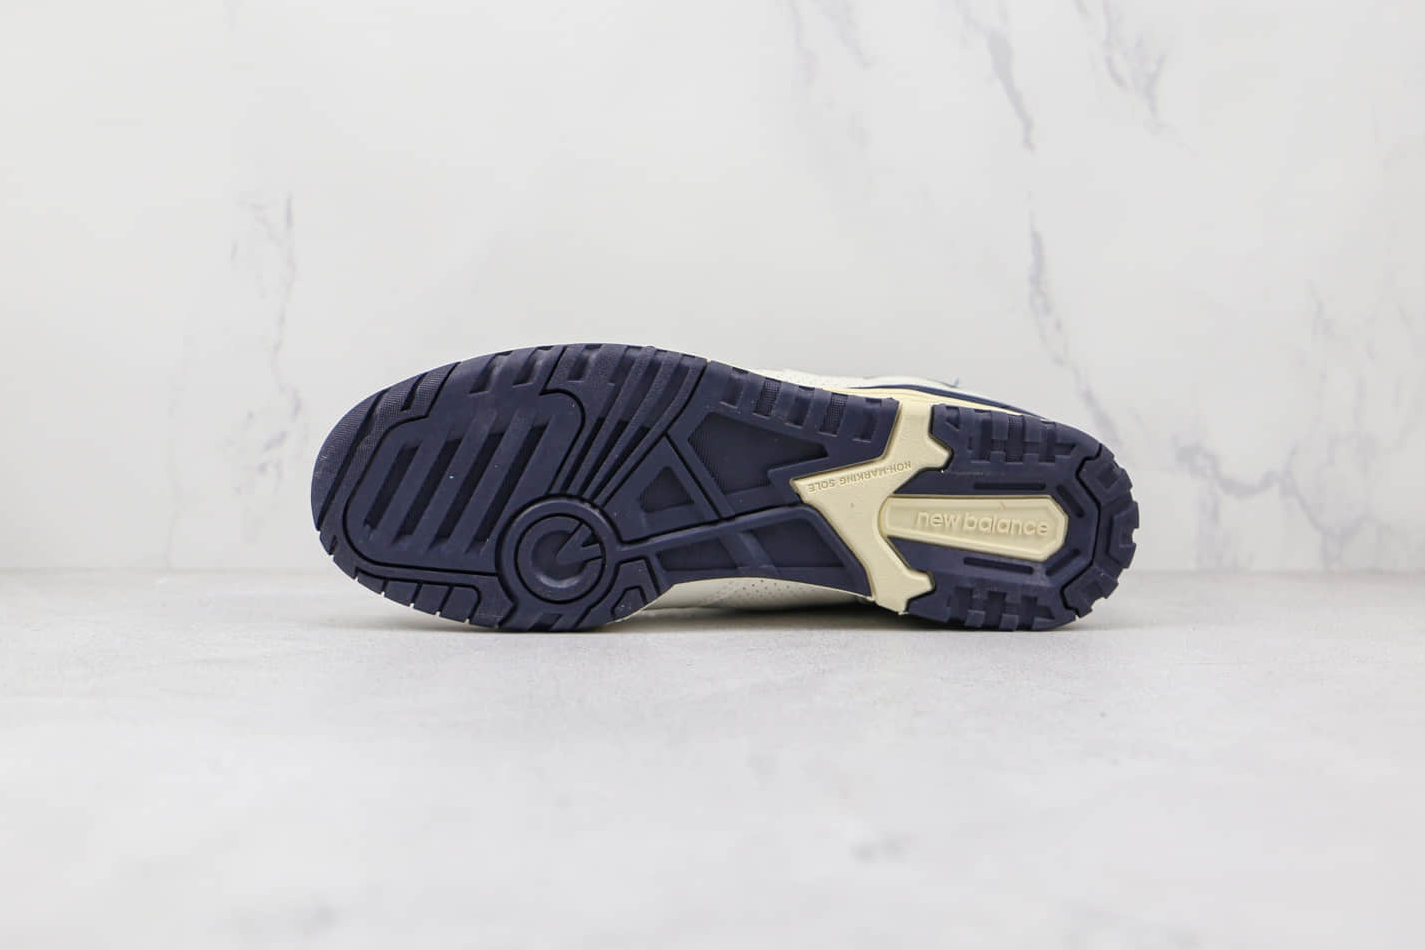 New Balance Aime Leon Dore x 550 'Navy' BB550ALF - Stylish Collaboration Sneakers